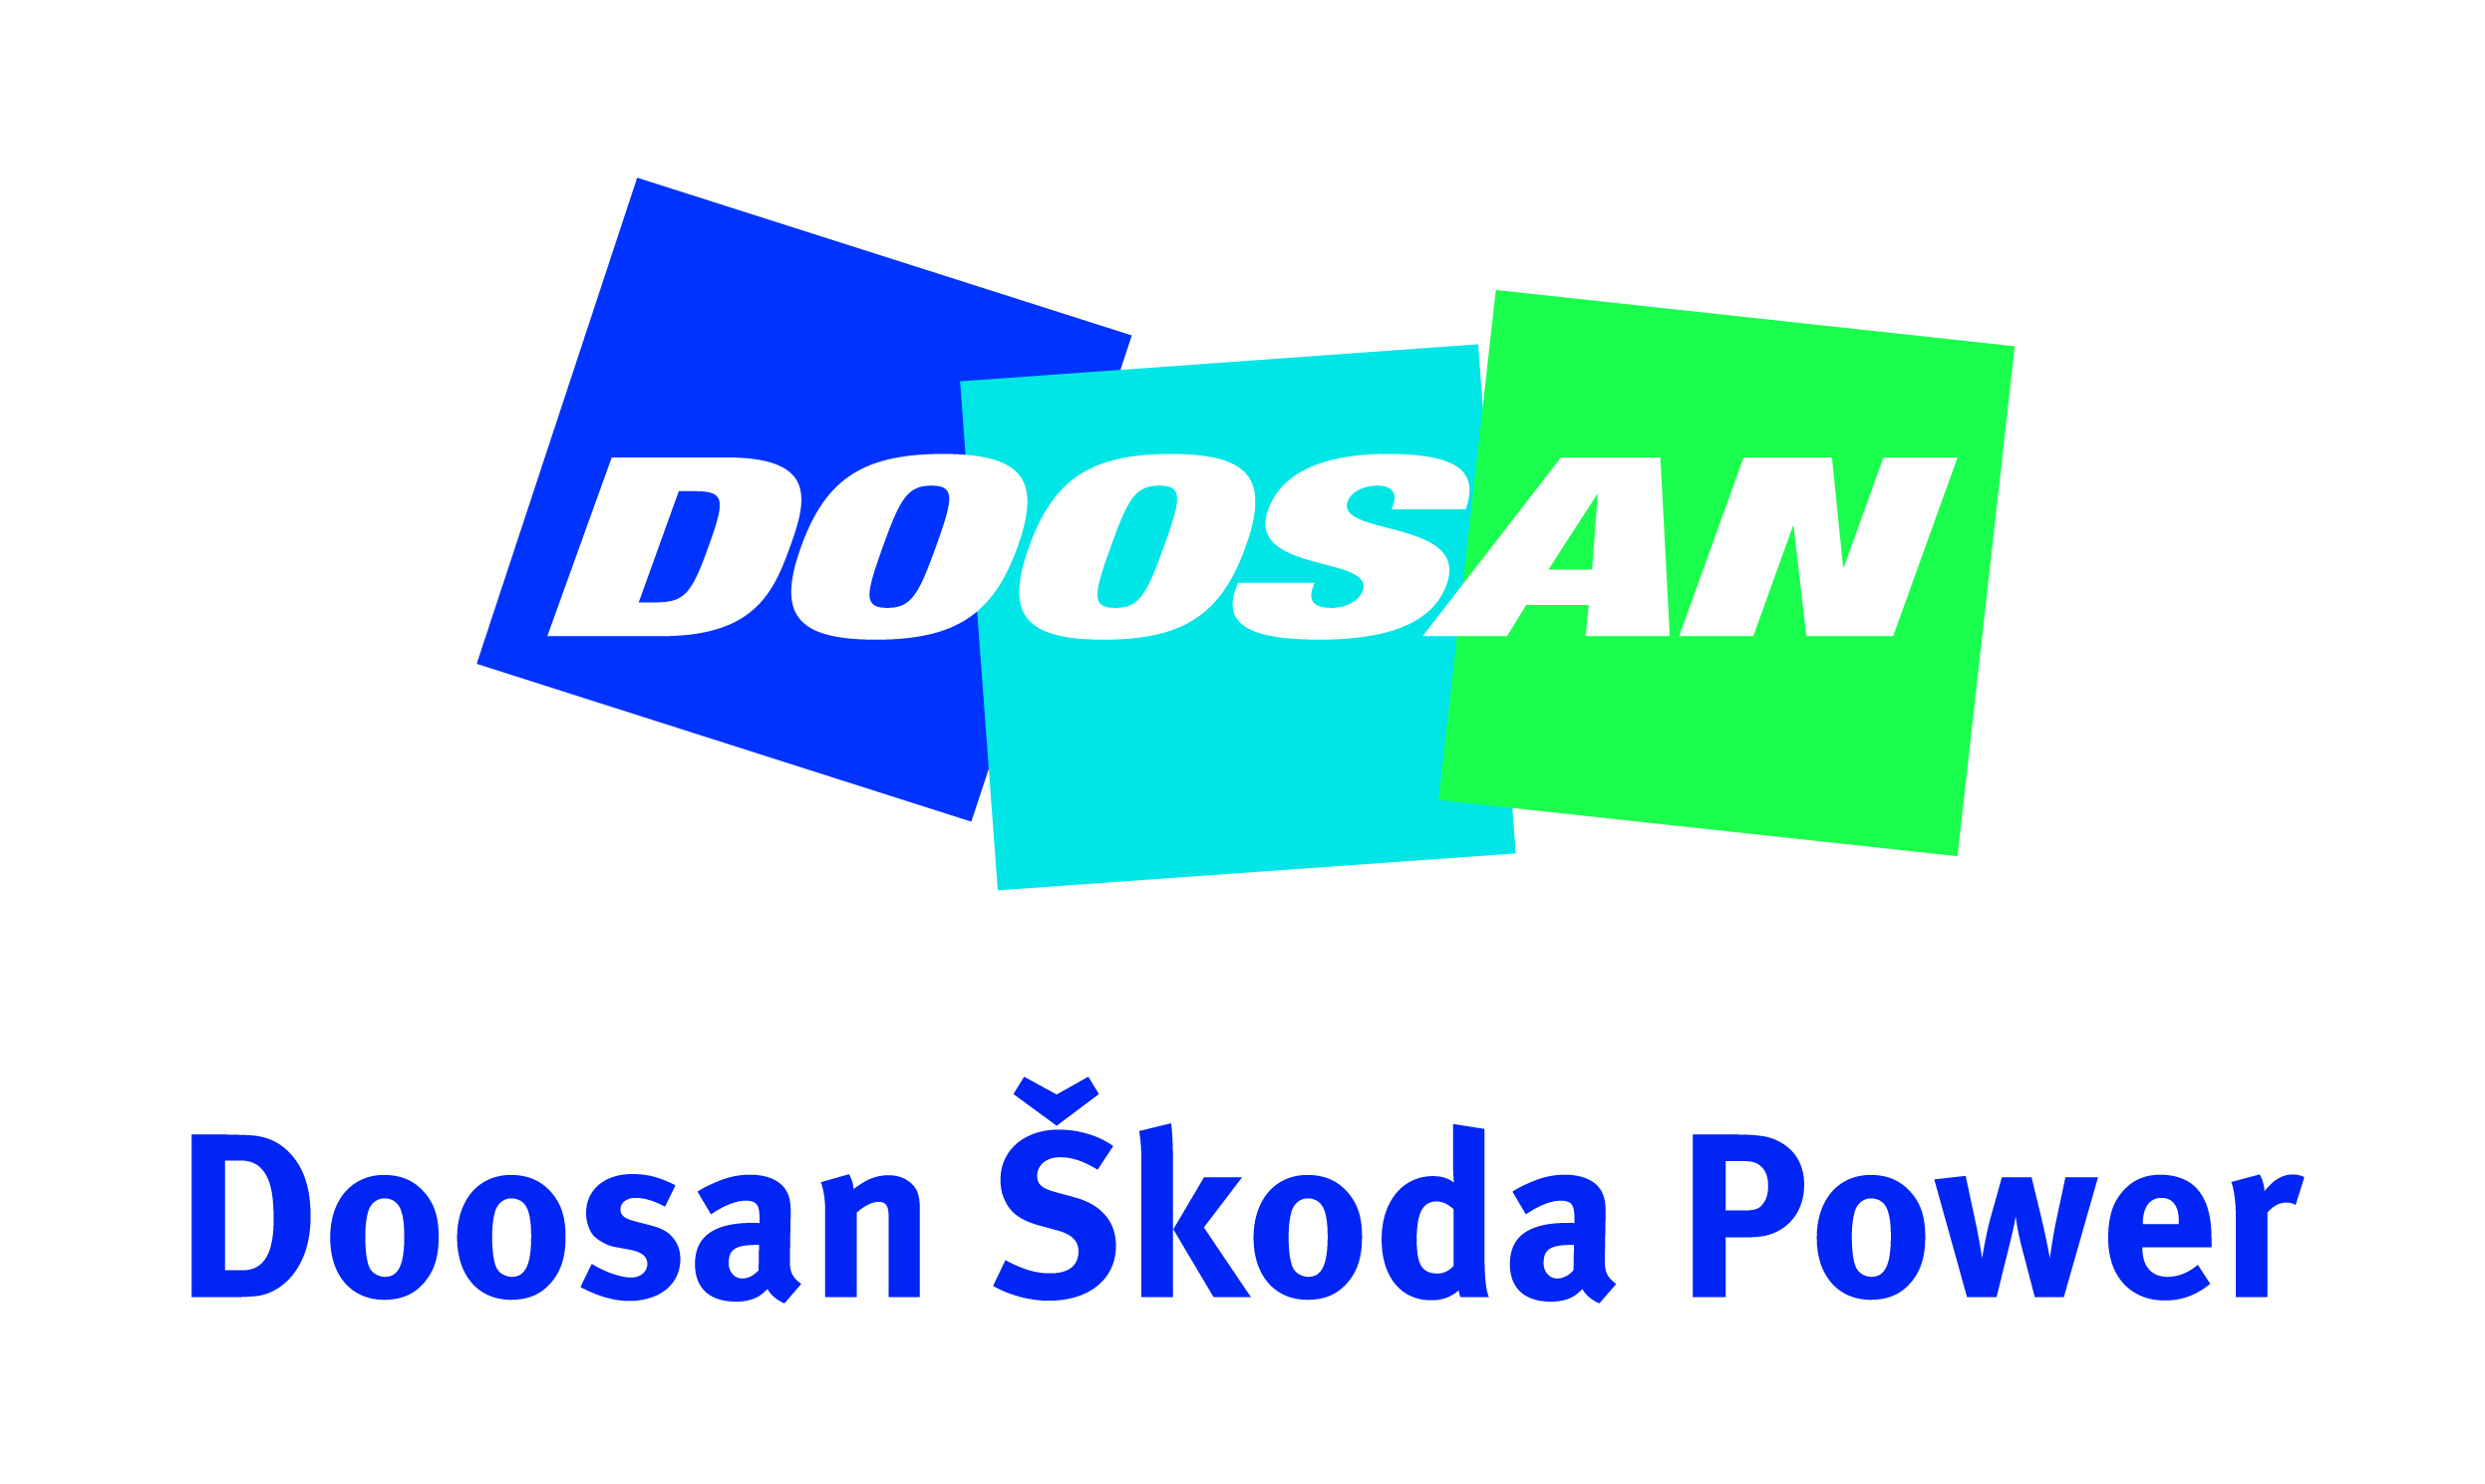 Doosan Škoda Power s.r.o.